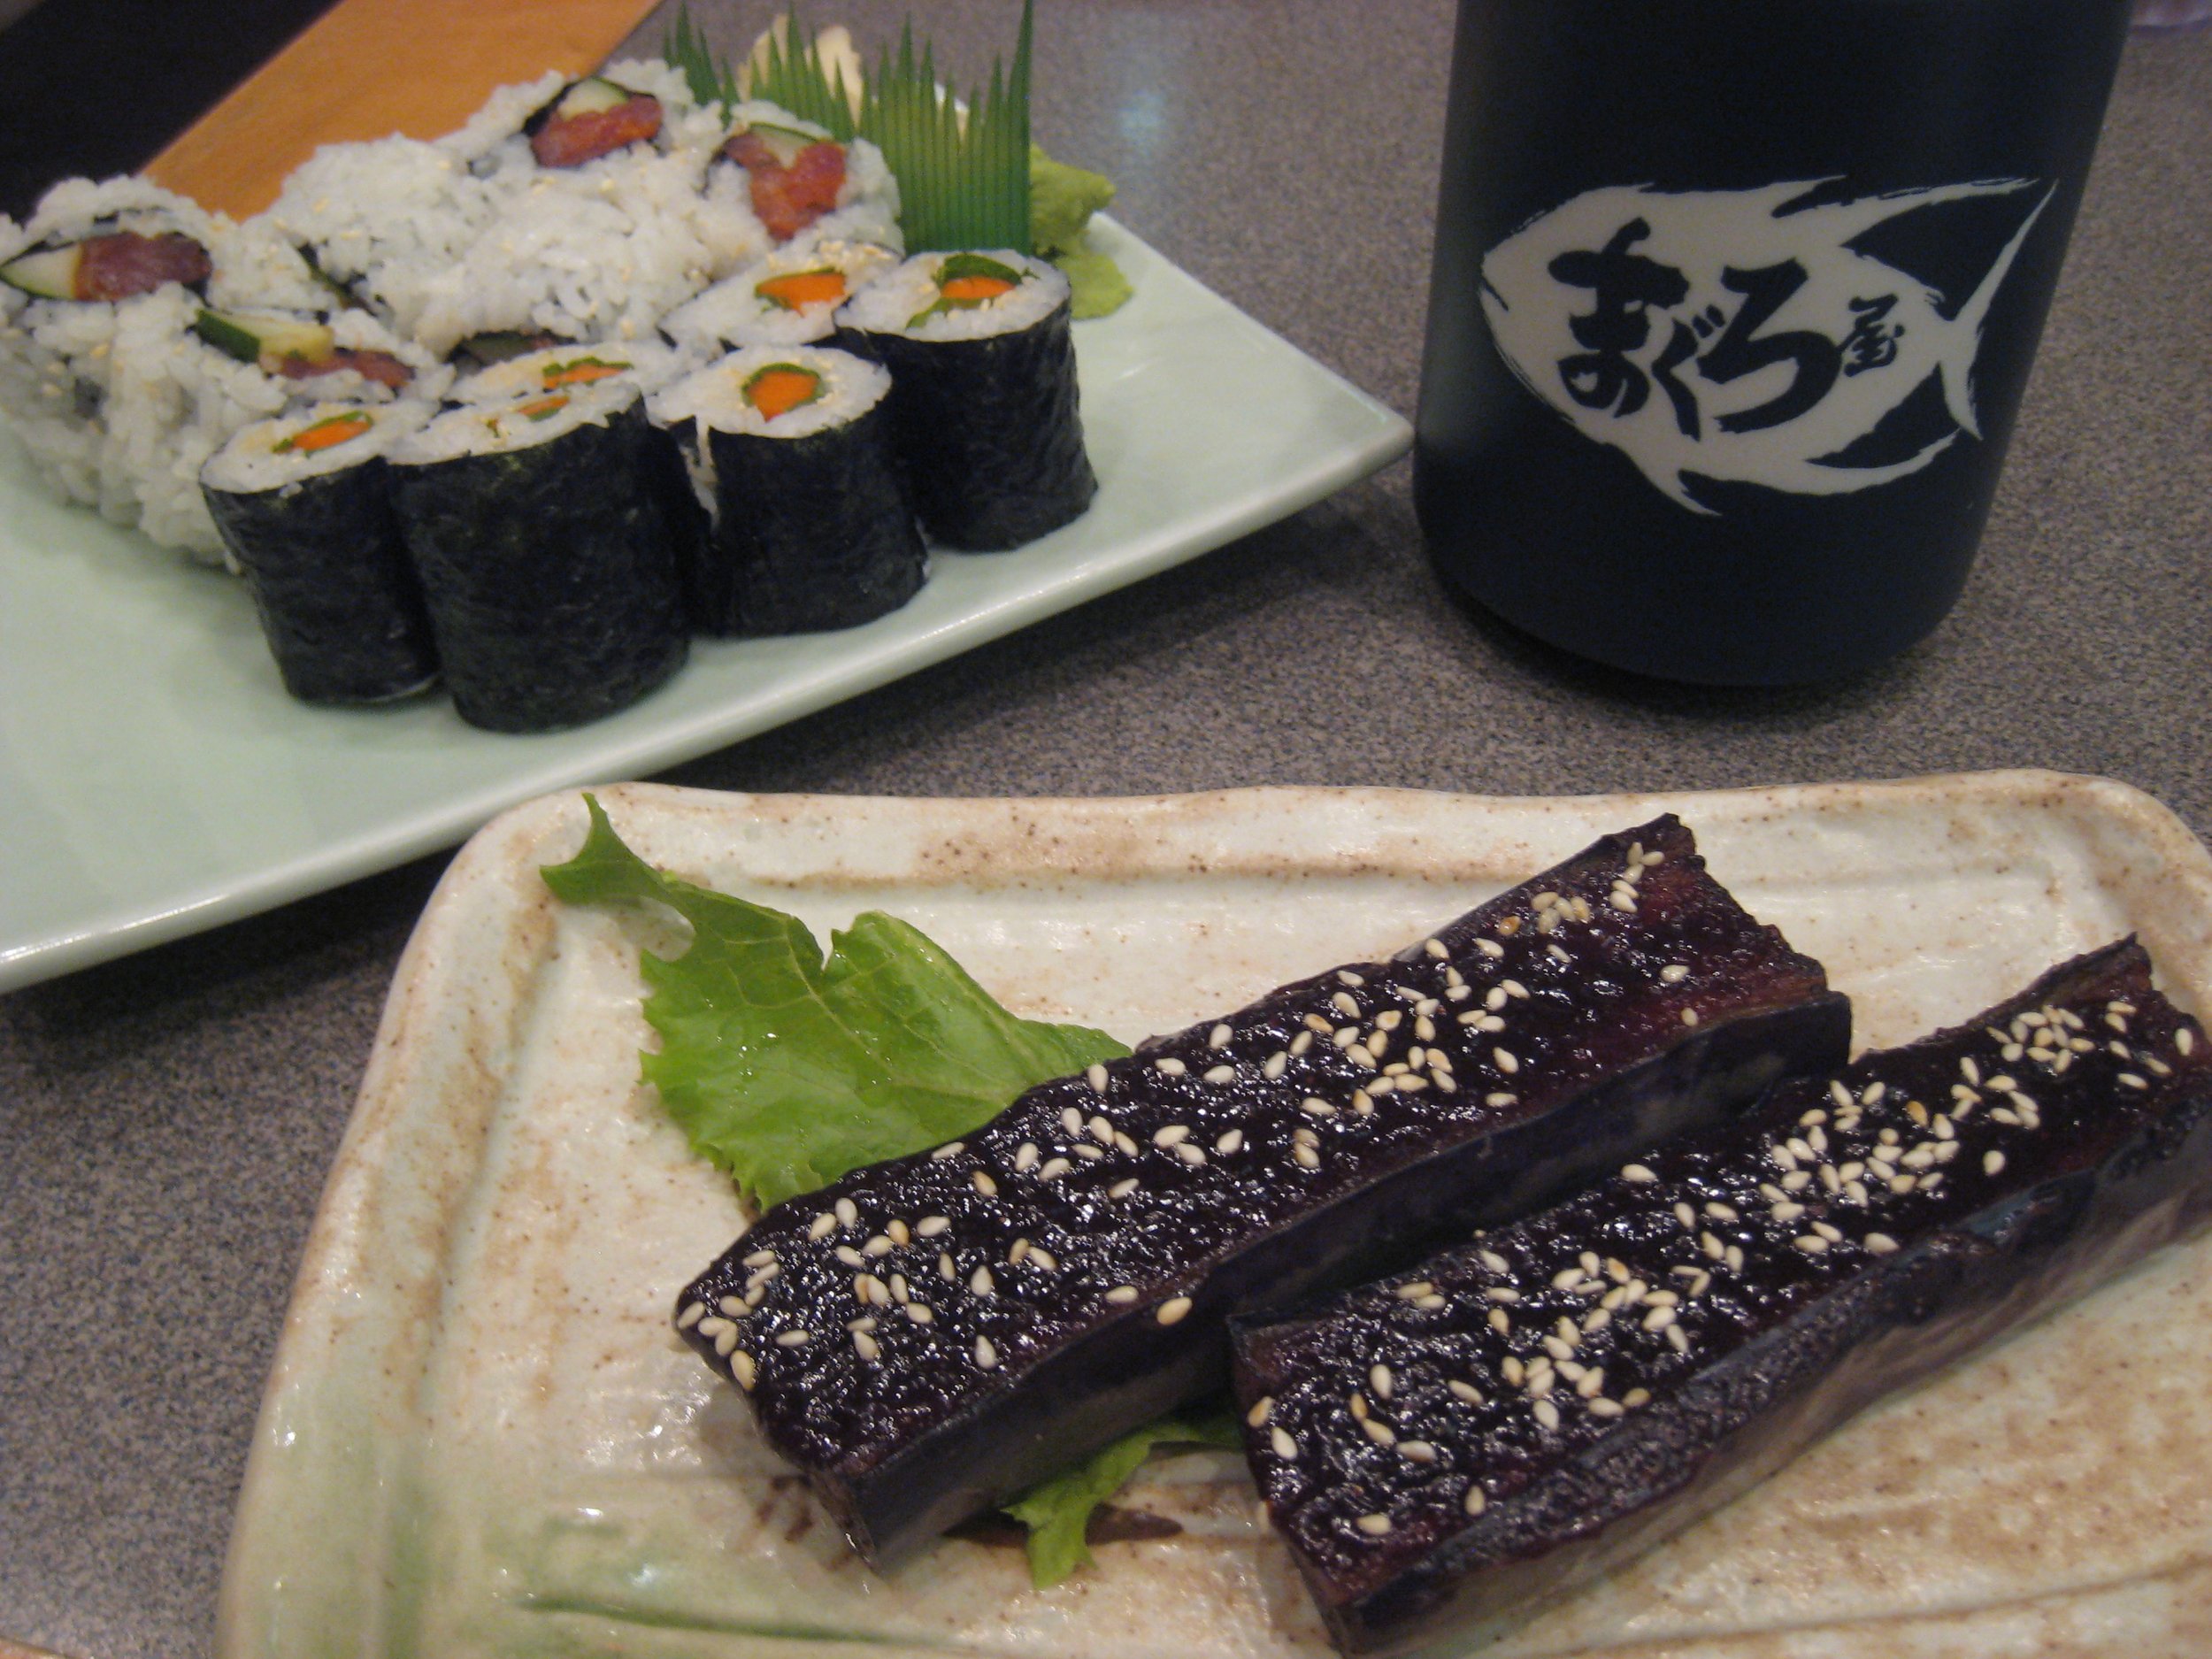  Maguro-Ya’s secret menu items include chicken nanban, nasu (eggplant) and konnyaku (konjac) dengaku and assorted vegetable nigiri sushi selections.  